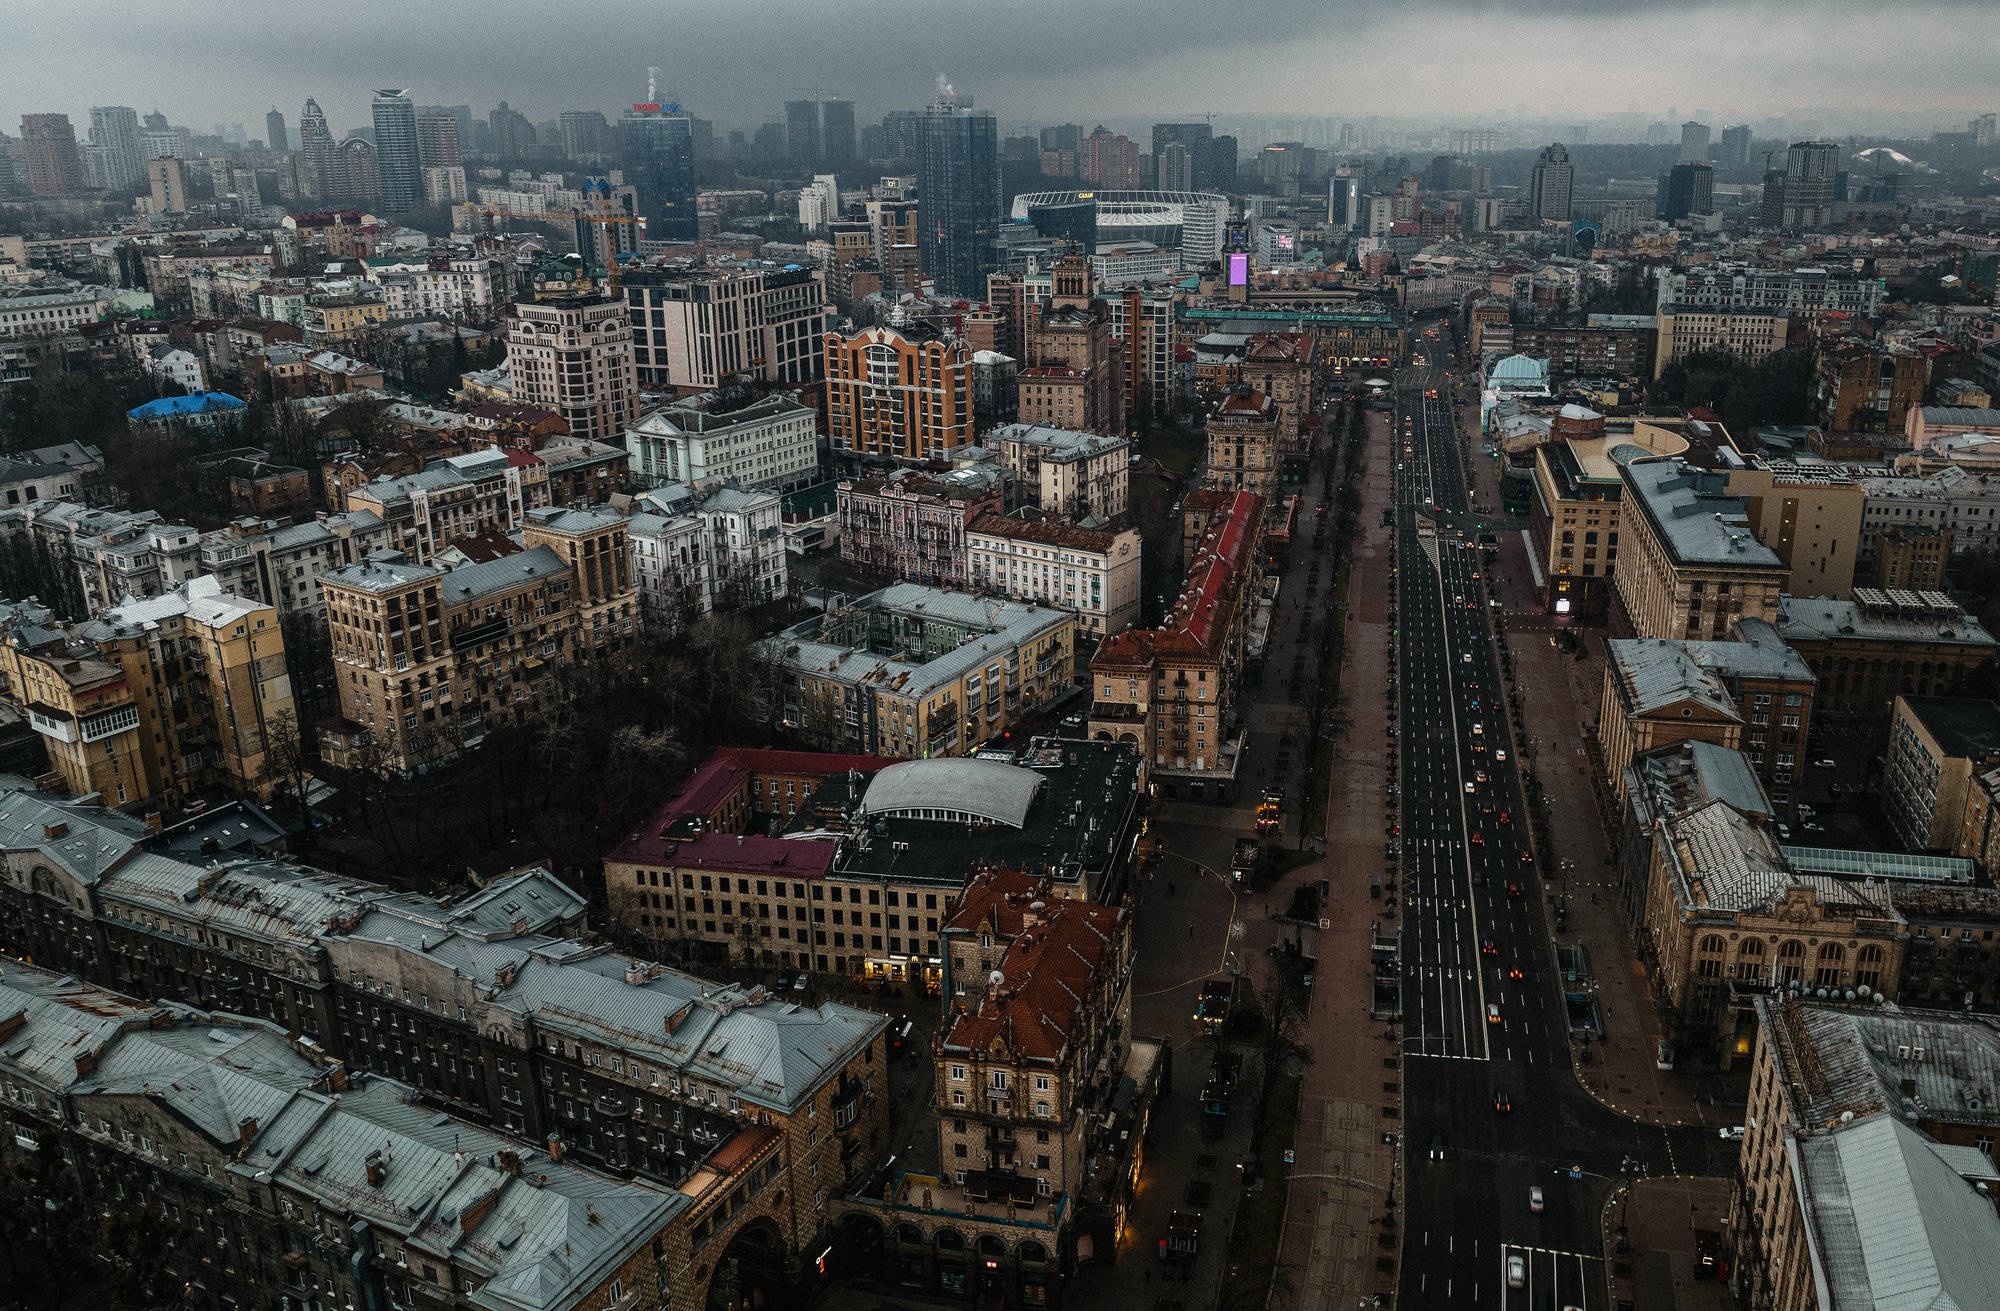 FILE - Cars move down a street in Kyiv, Ukraine, Thursday, Feb. 24, 2022. (AP Photo/Emilio Morenatti, File)